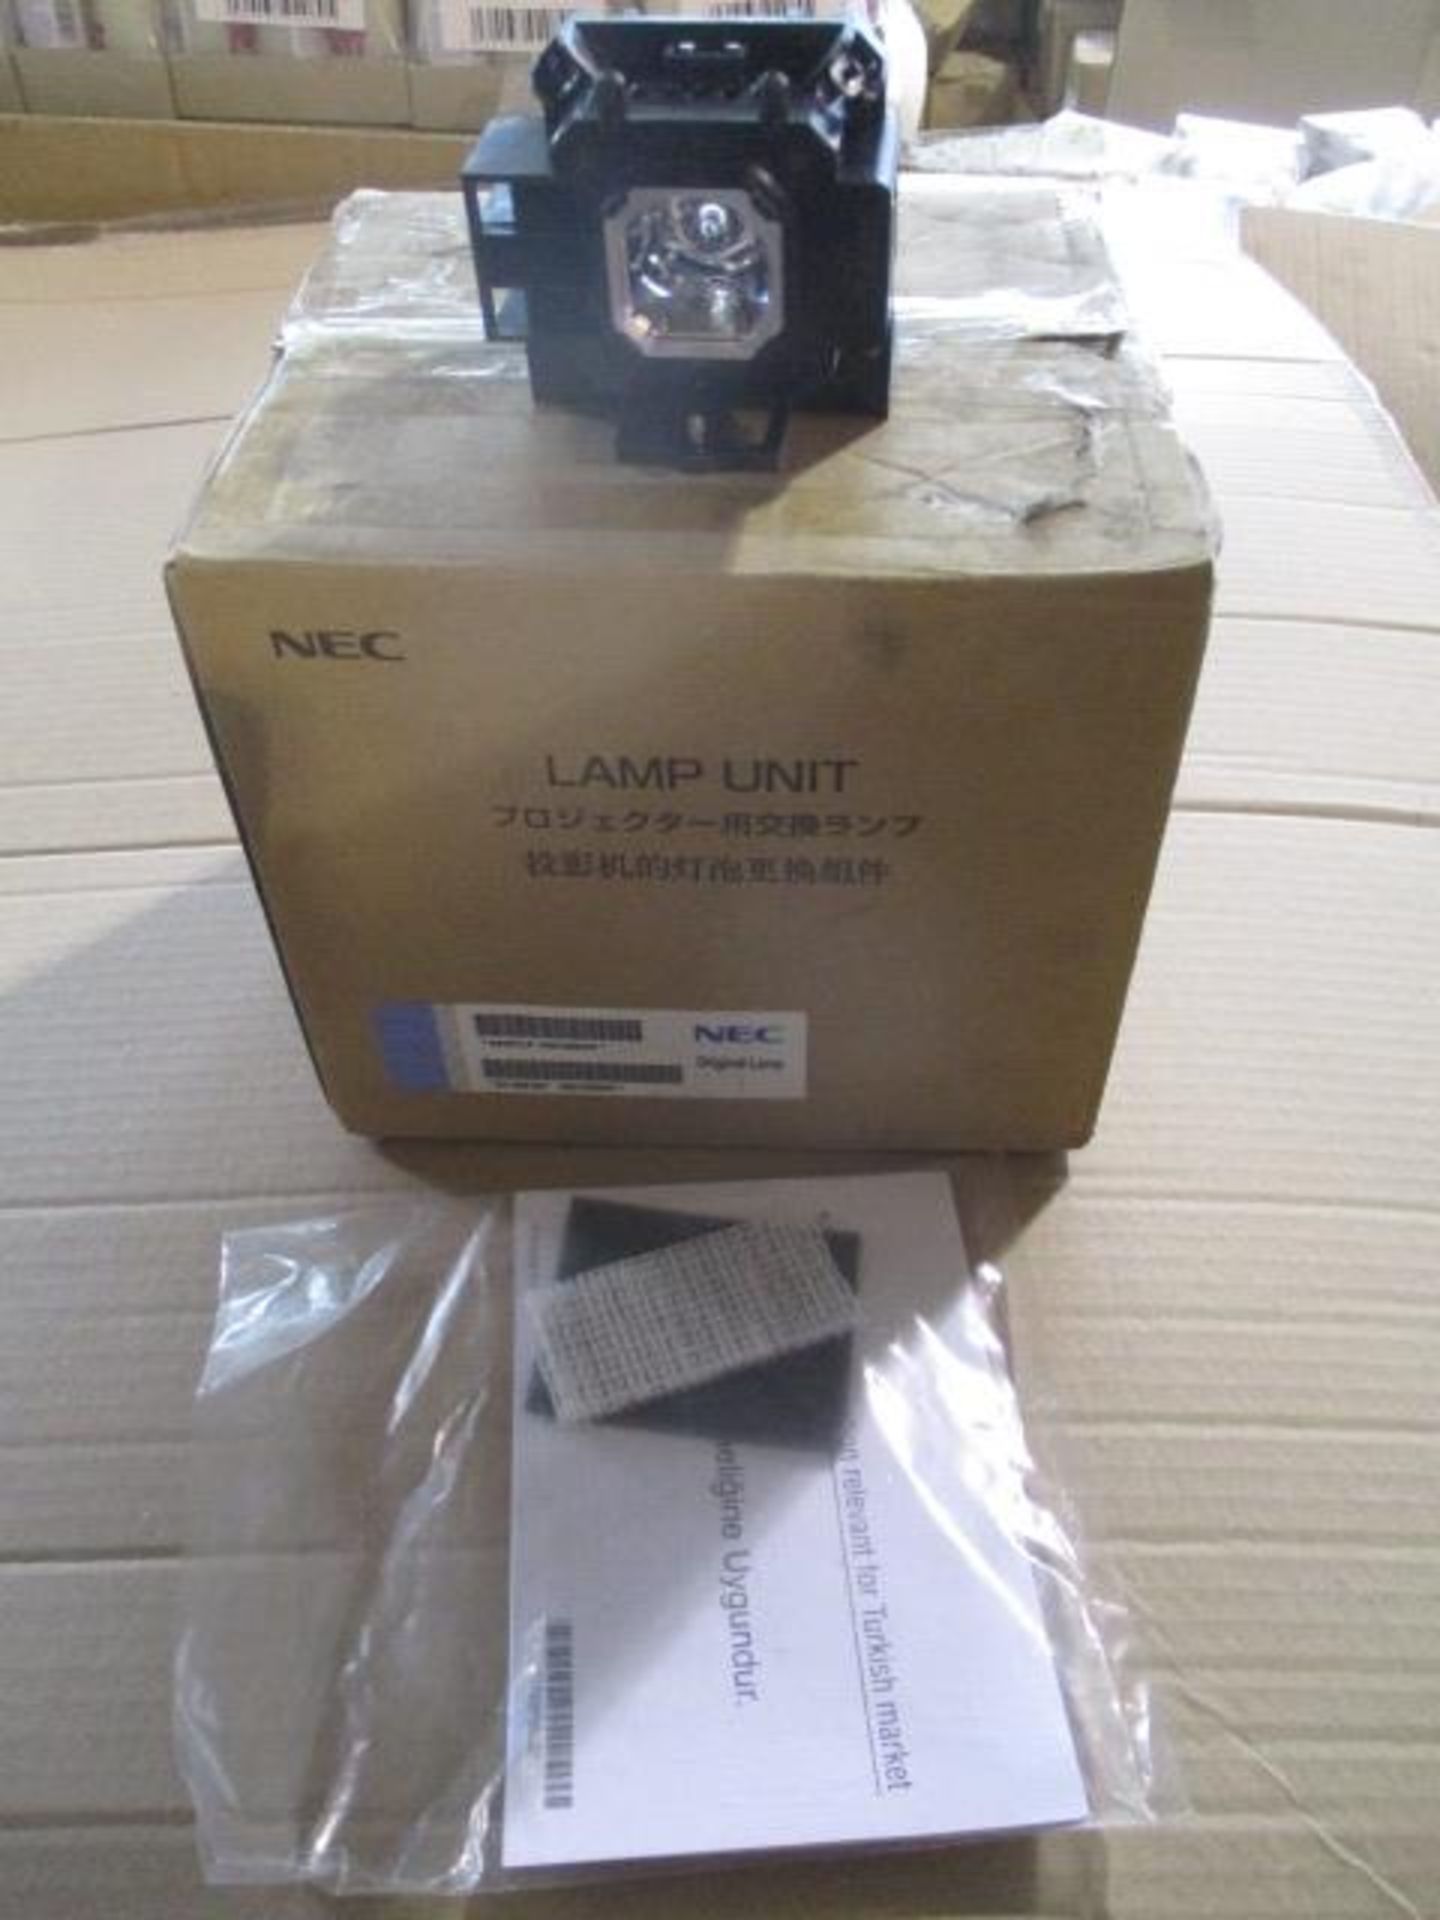 NEC replacement lamp unit rrp £85